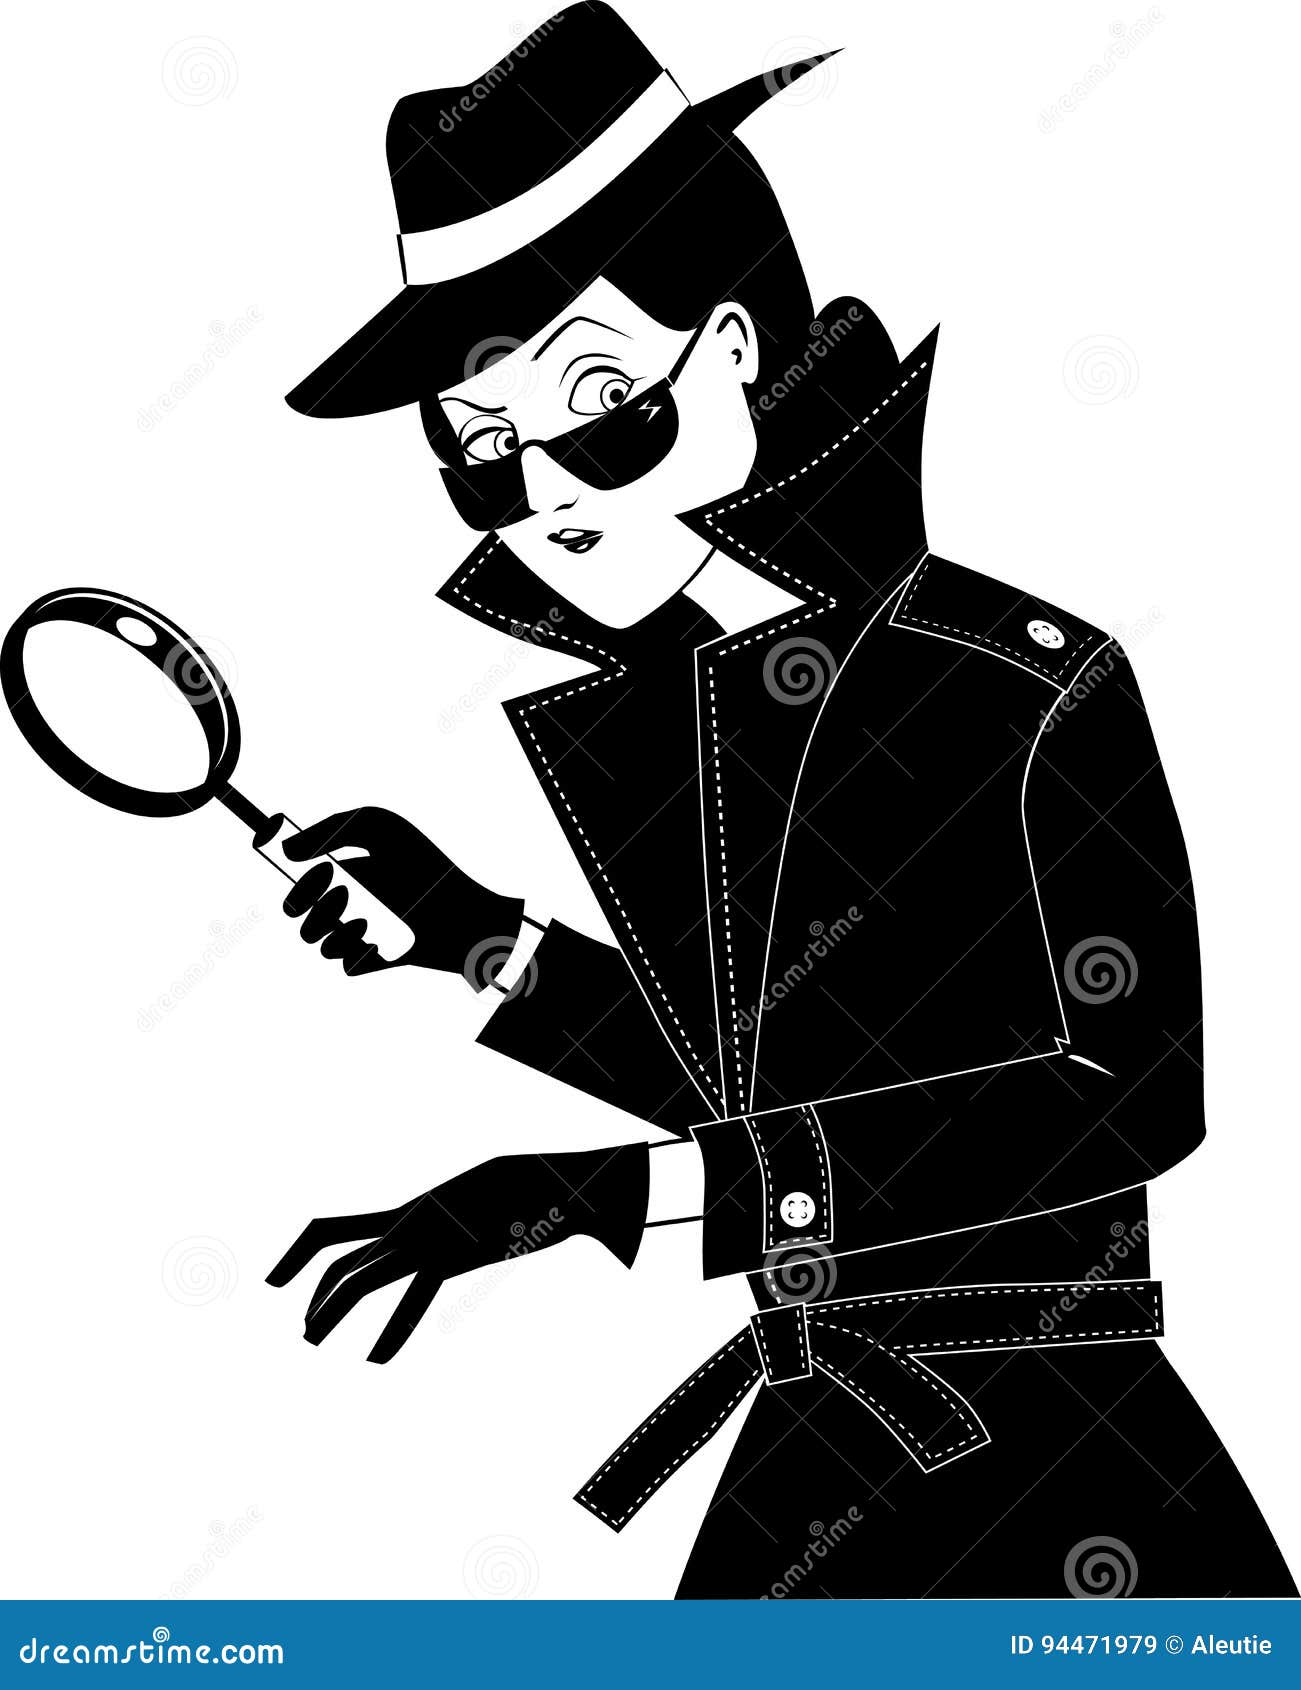 Secret agent clip-art stock vector. Illustration of international - 94471979